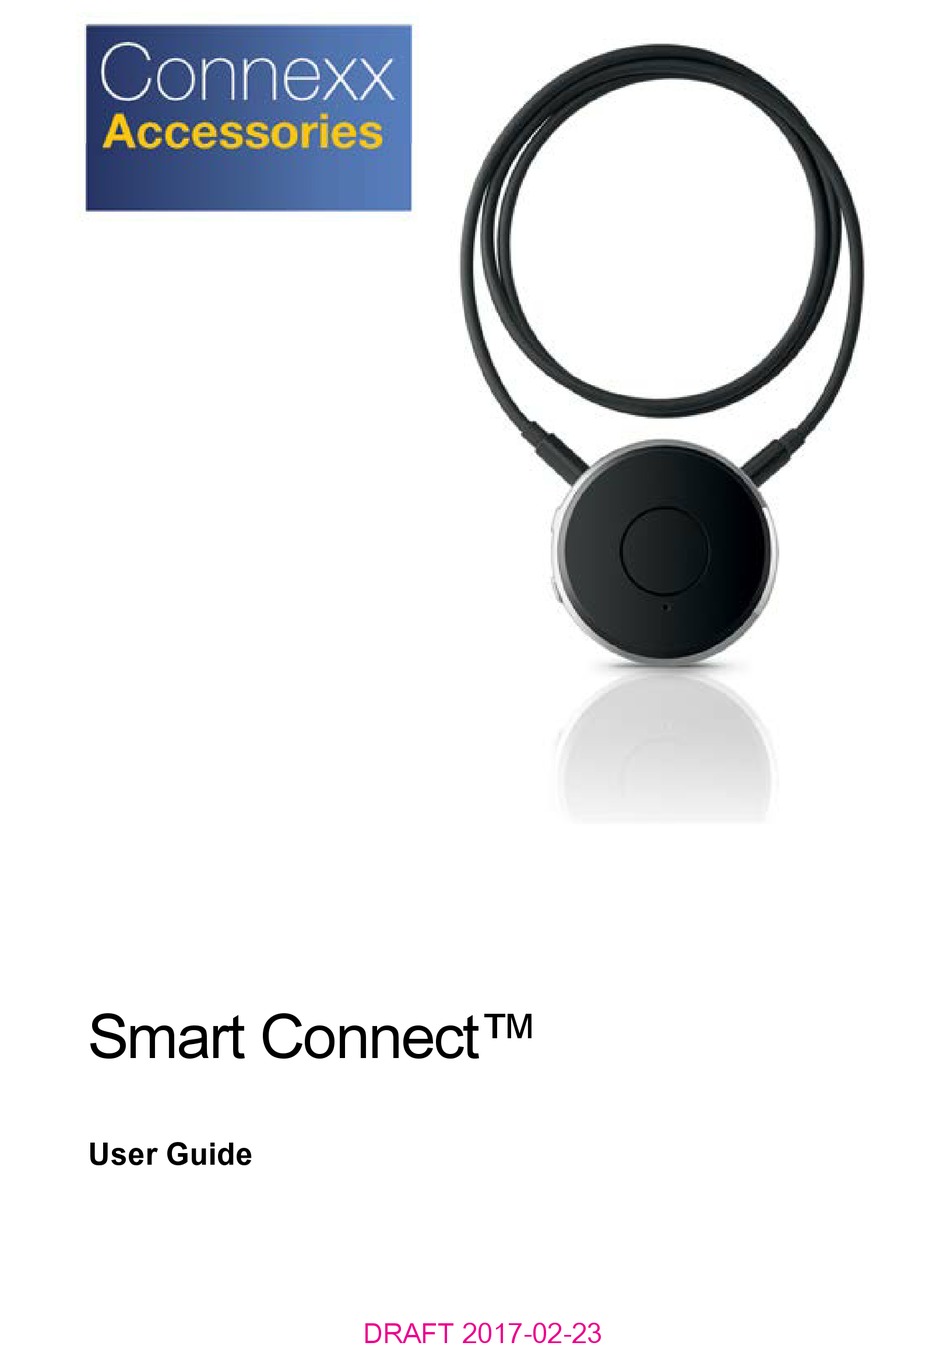 connexx smart direct